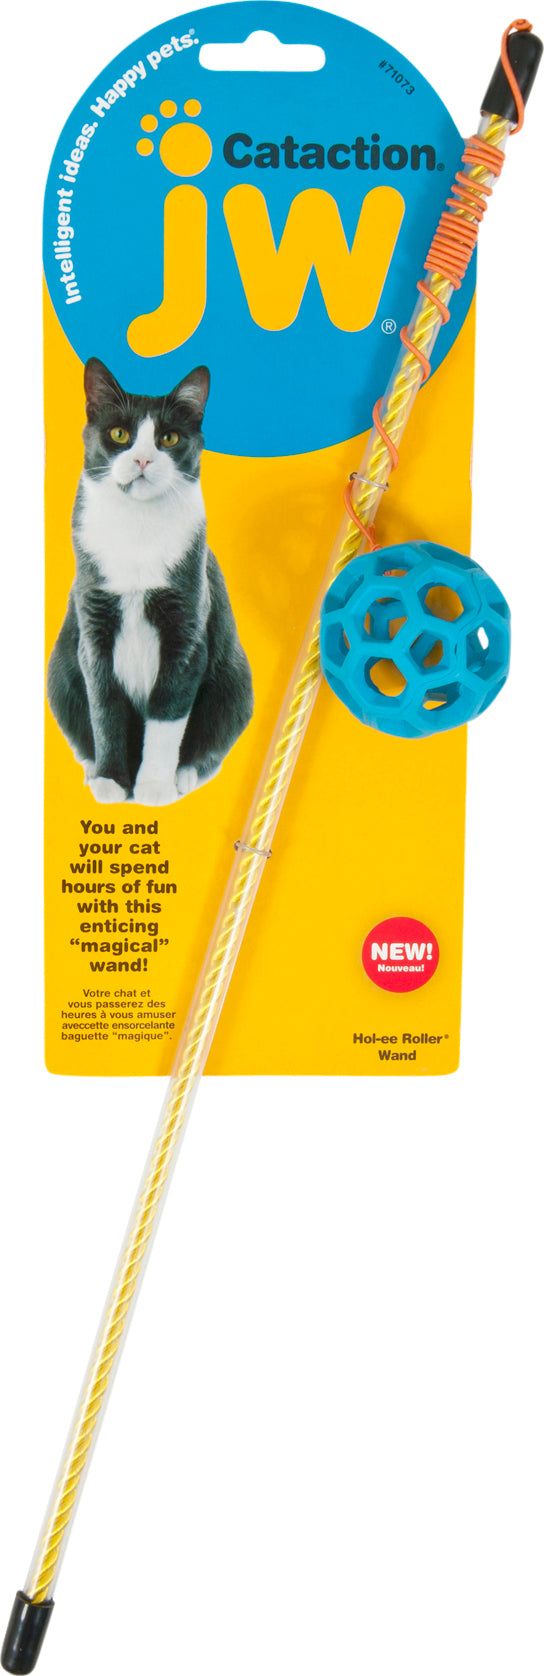 JW Cataction Hol-ee drillpinne katteleke kommer med ball og fleksibel stang og er en super leke for katten.